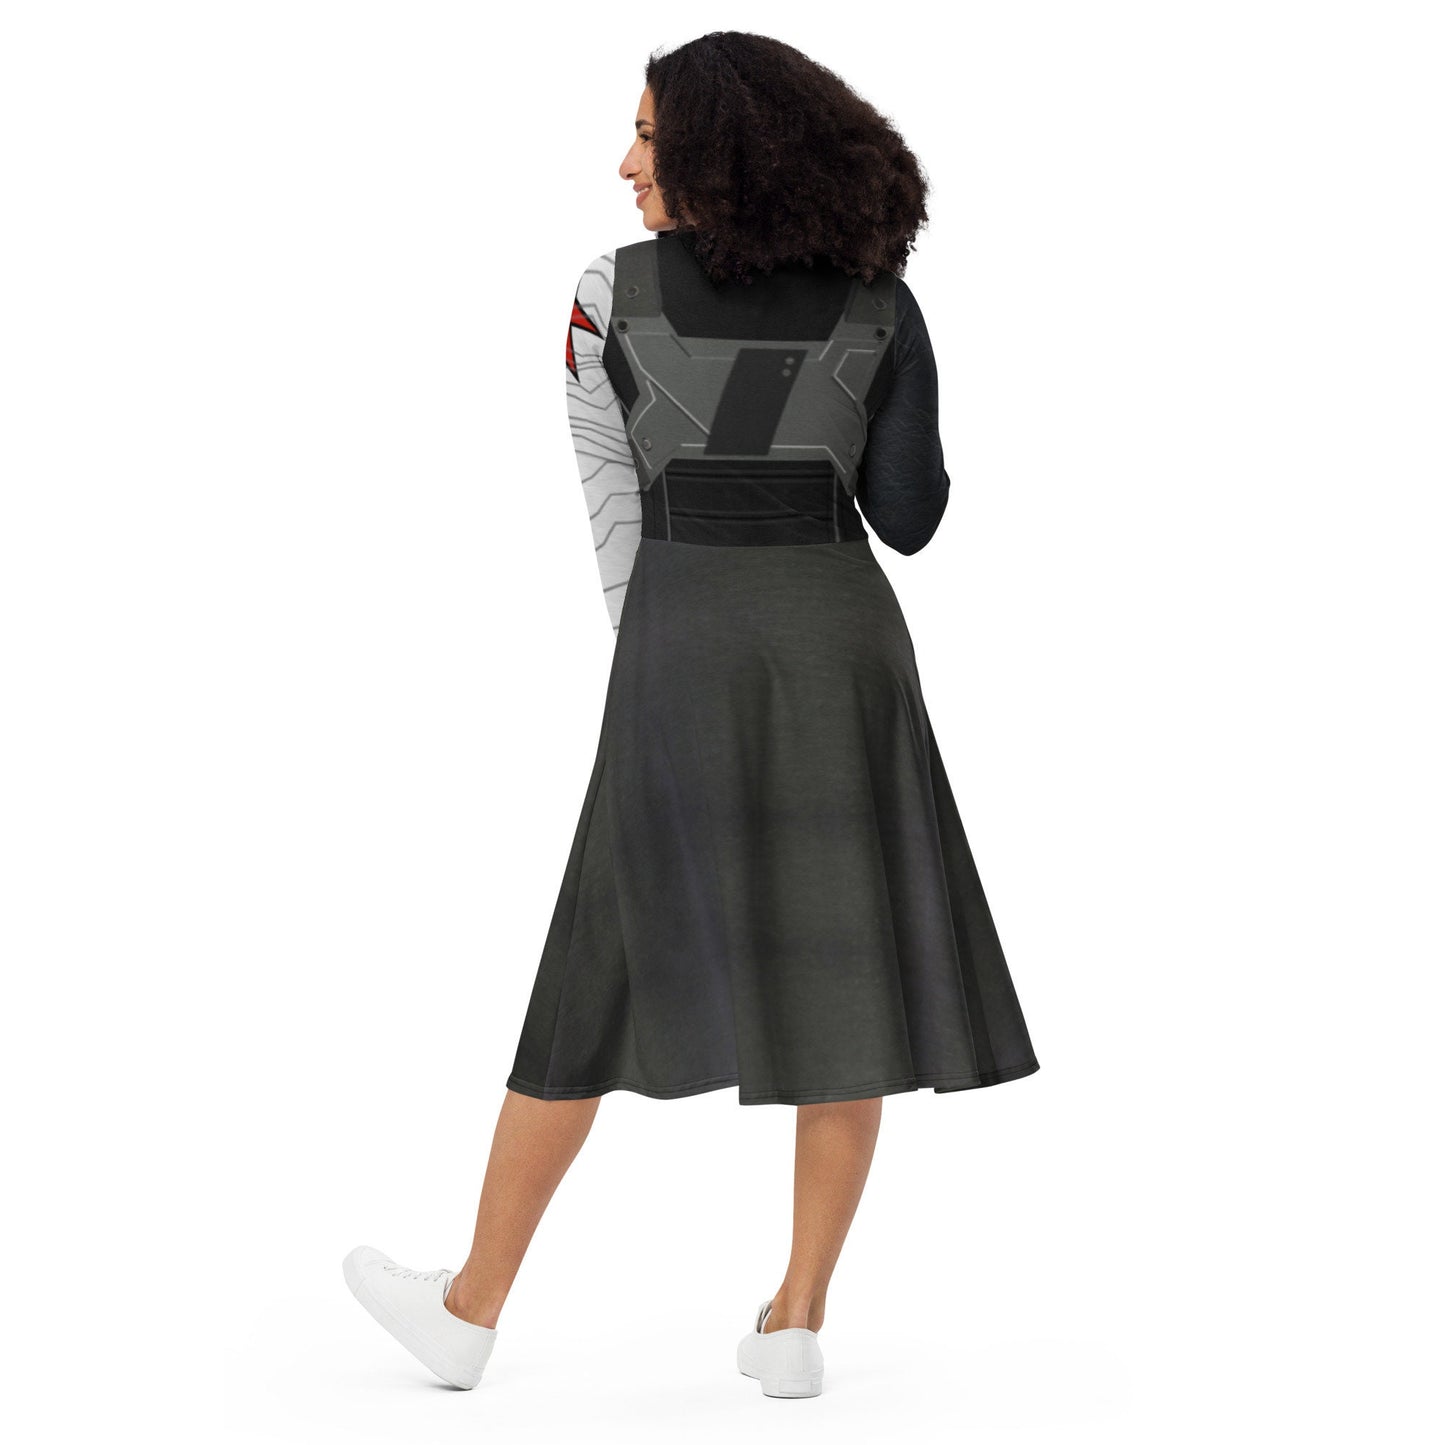 RUSH ORDER: Bucky Winter Soldier Inspired All-over print long sleeve midi dress